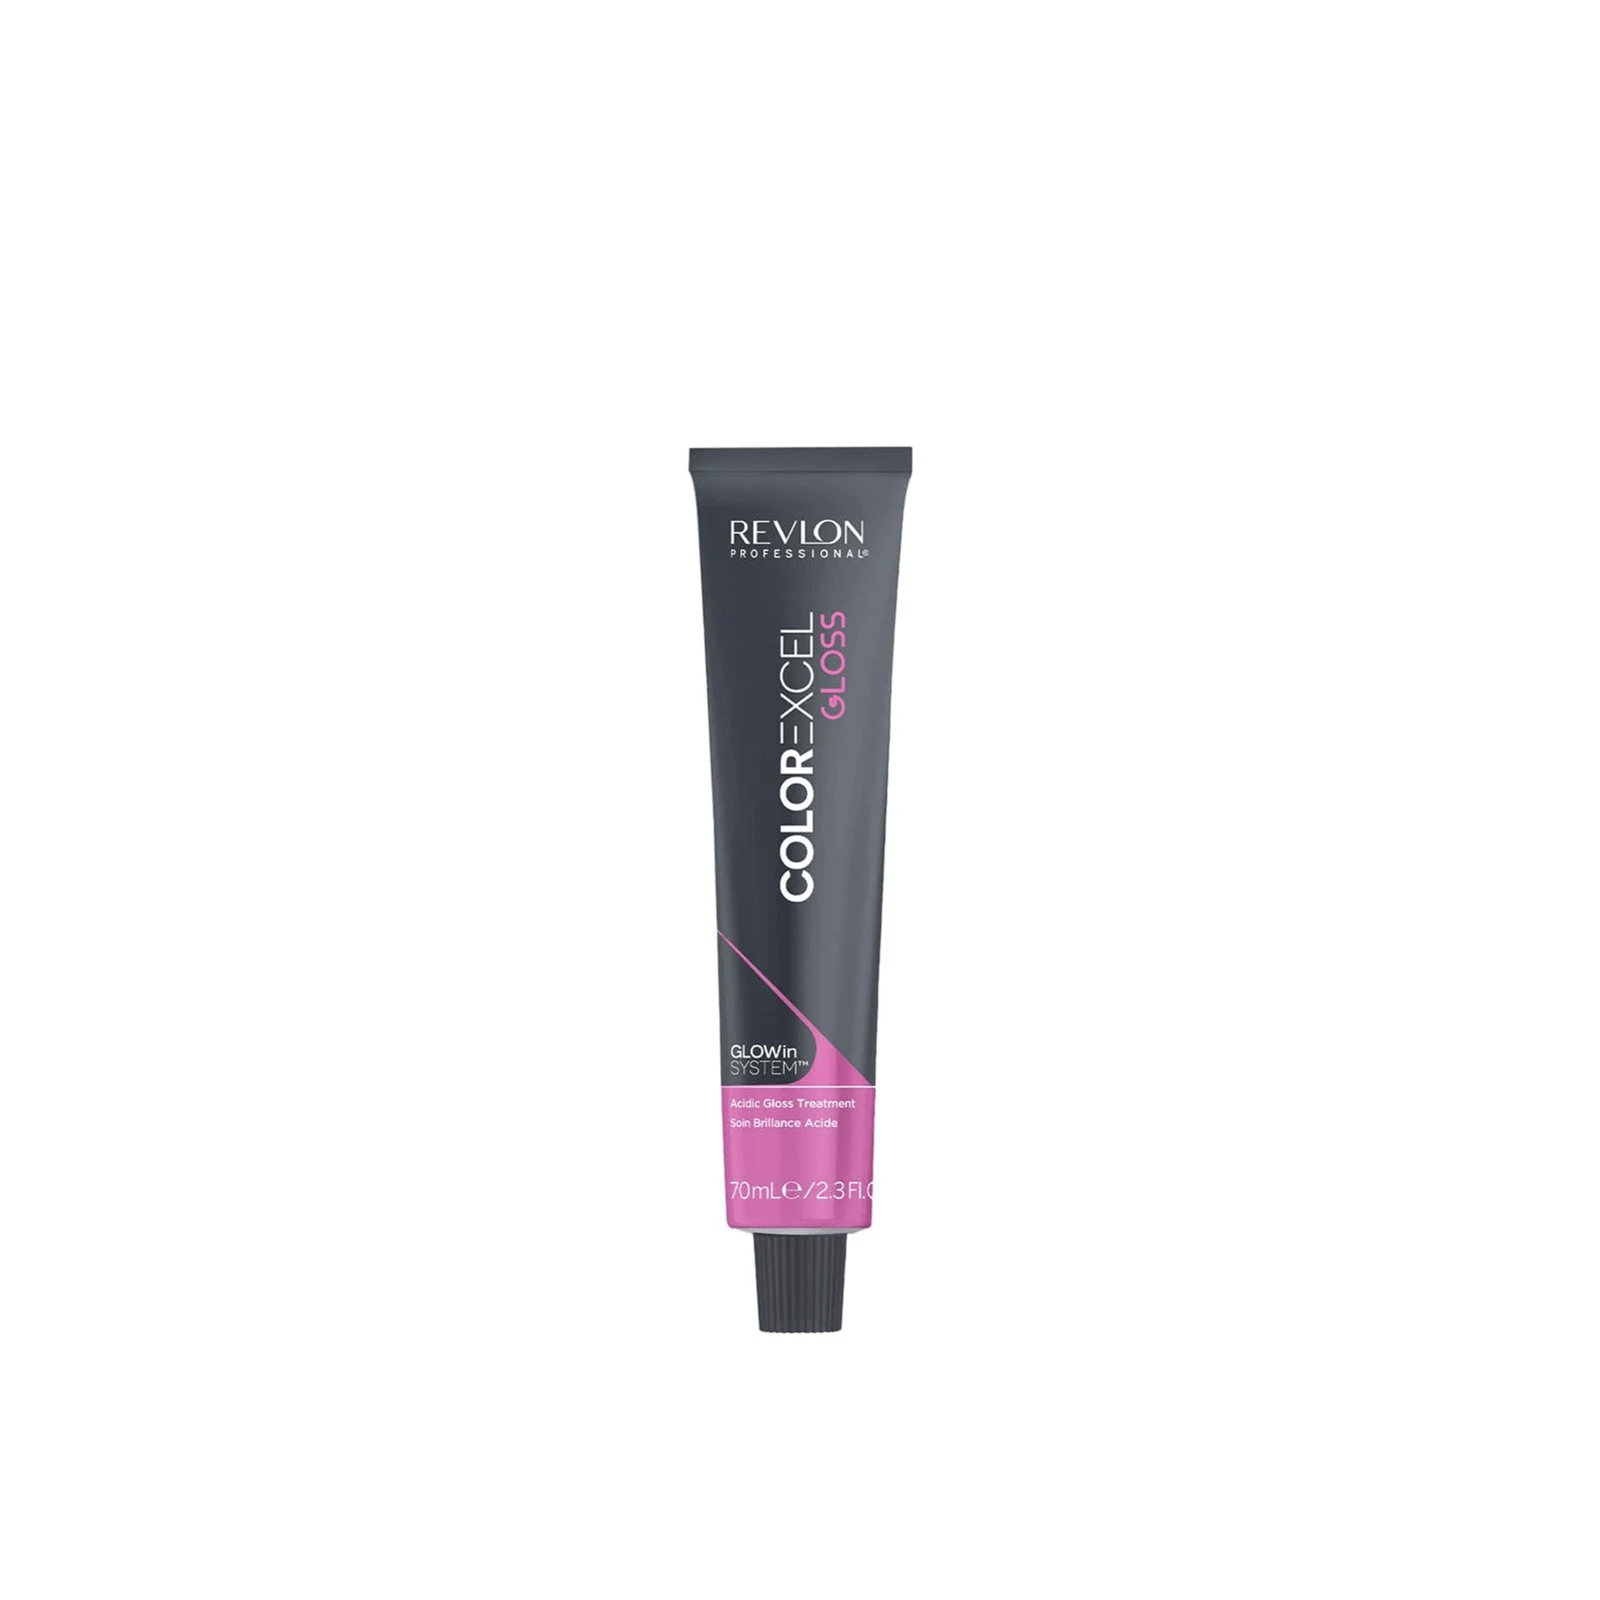 Revlon Professional Color Excel Gloss Acidic Gloss Treatment Demi-Permanent Hair Dye 10.1 Moonlight 70ml (2.3 fl oz)